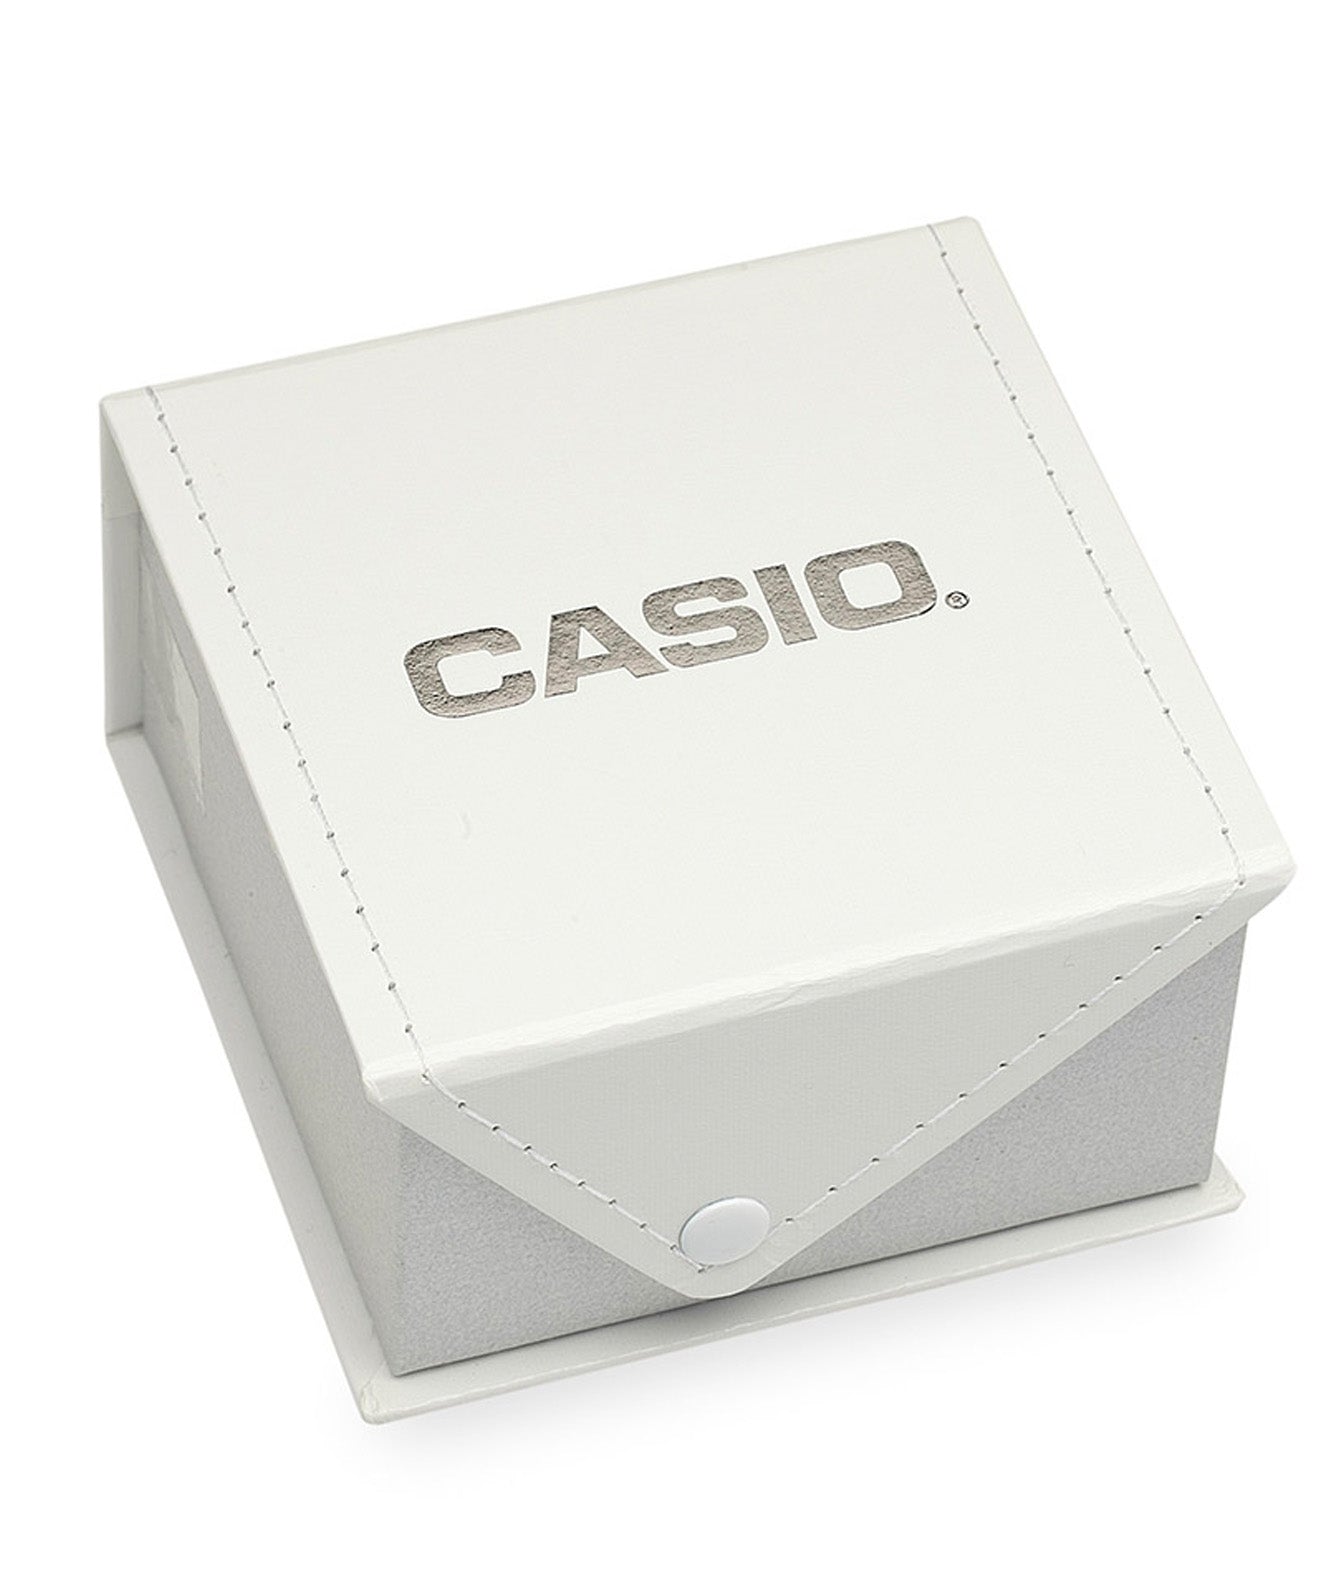 Casio Gift Watch Box, K-1001PWB